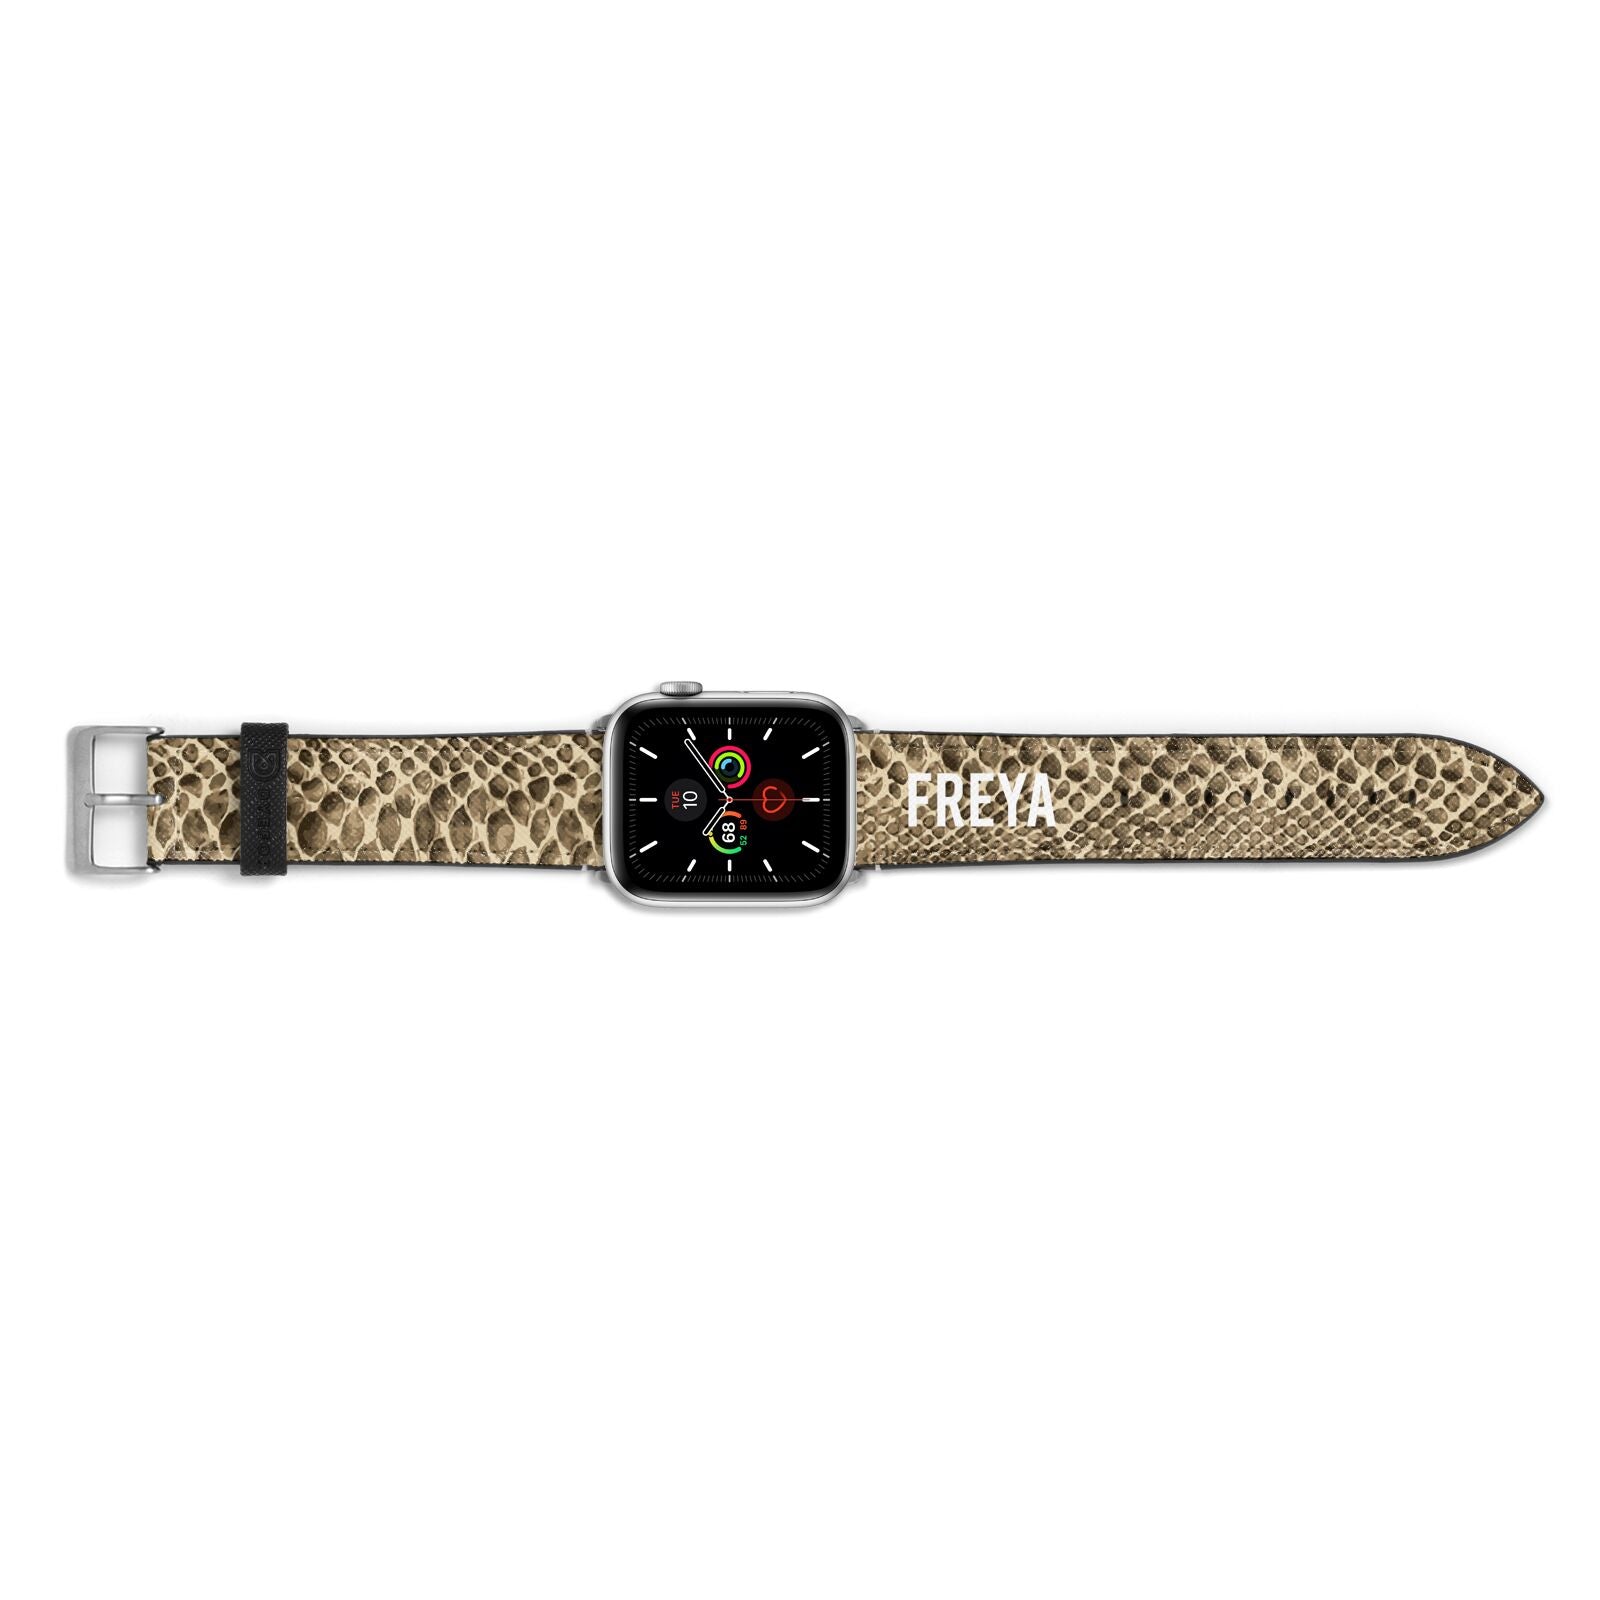 Personalised Tan Snakeskin Apple Watch Strap Landscape Image Silver Hardware